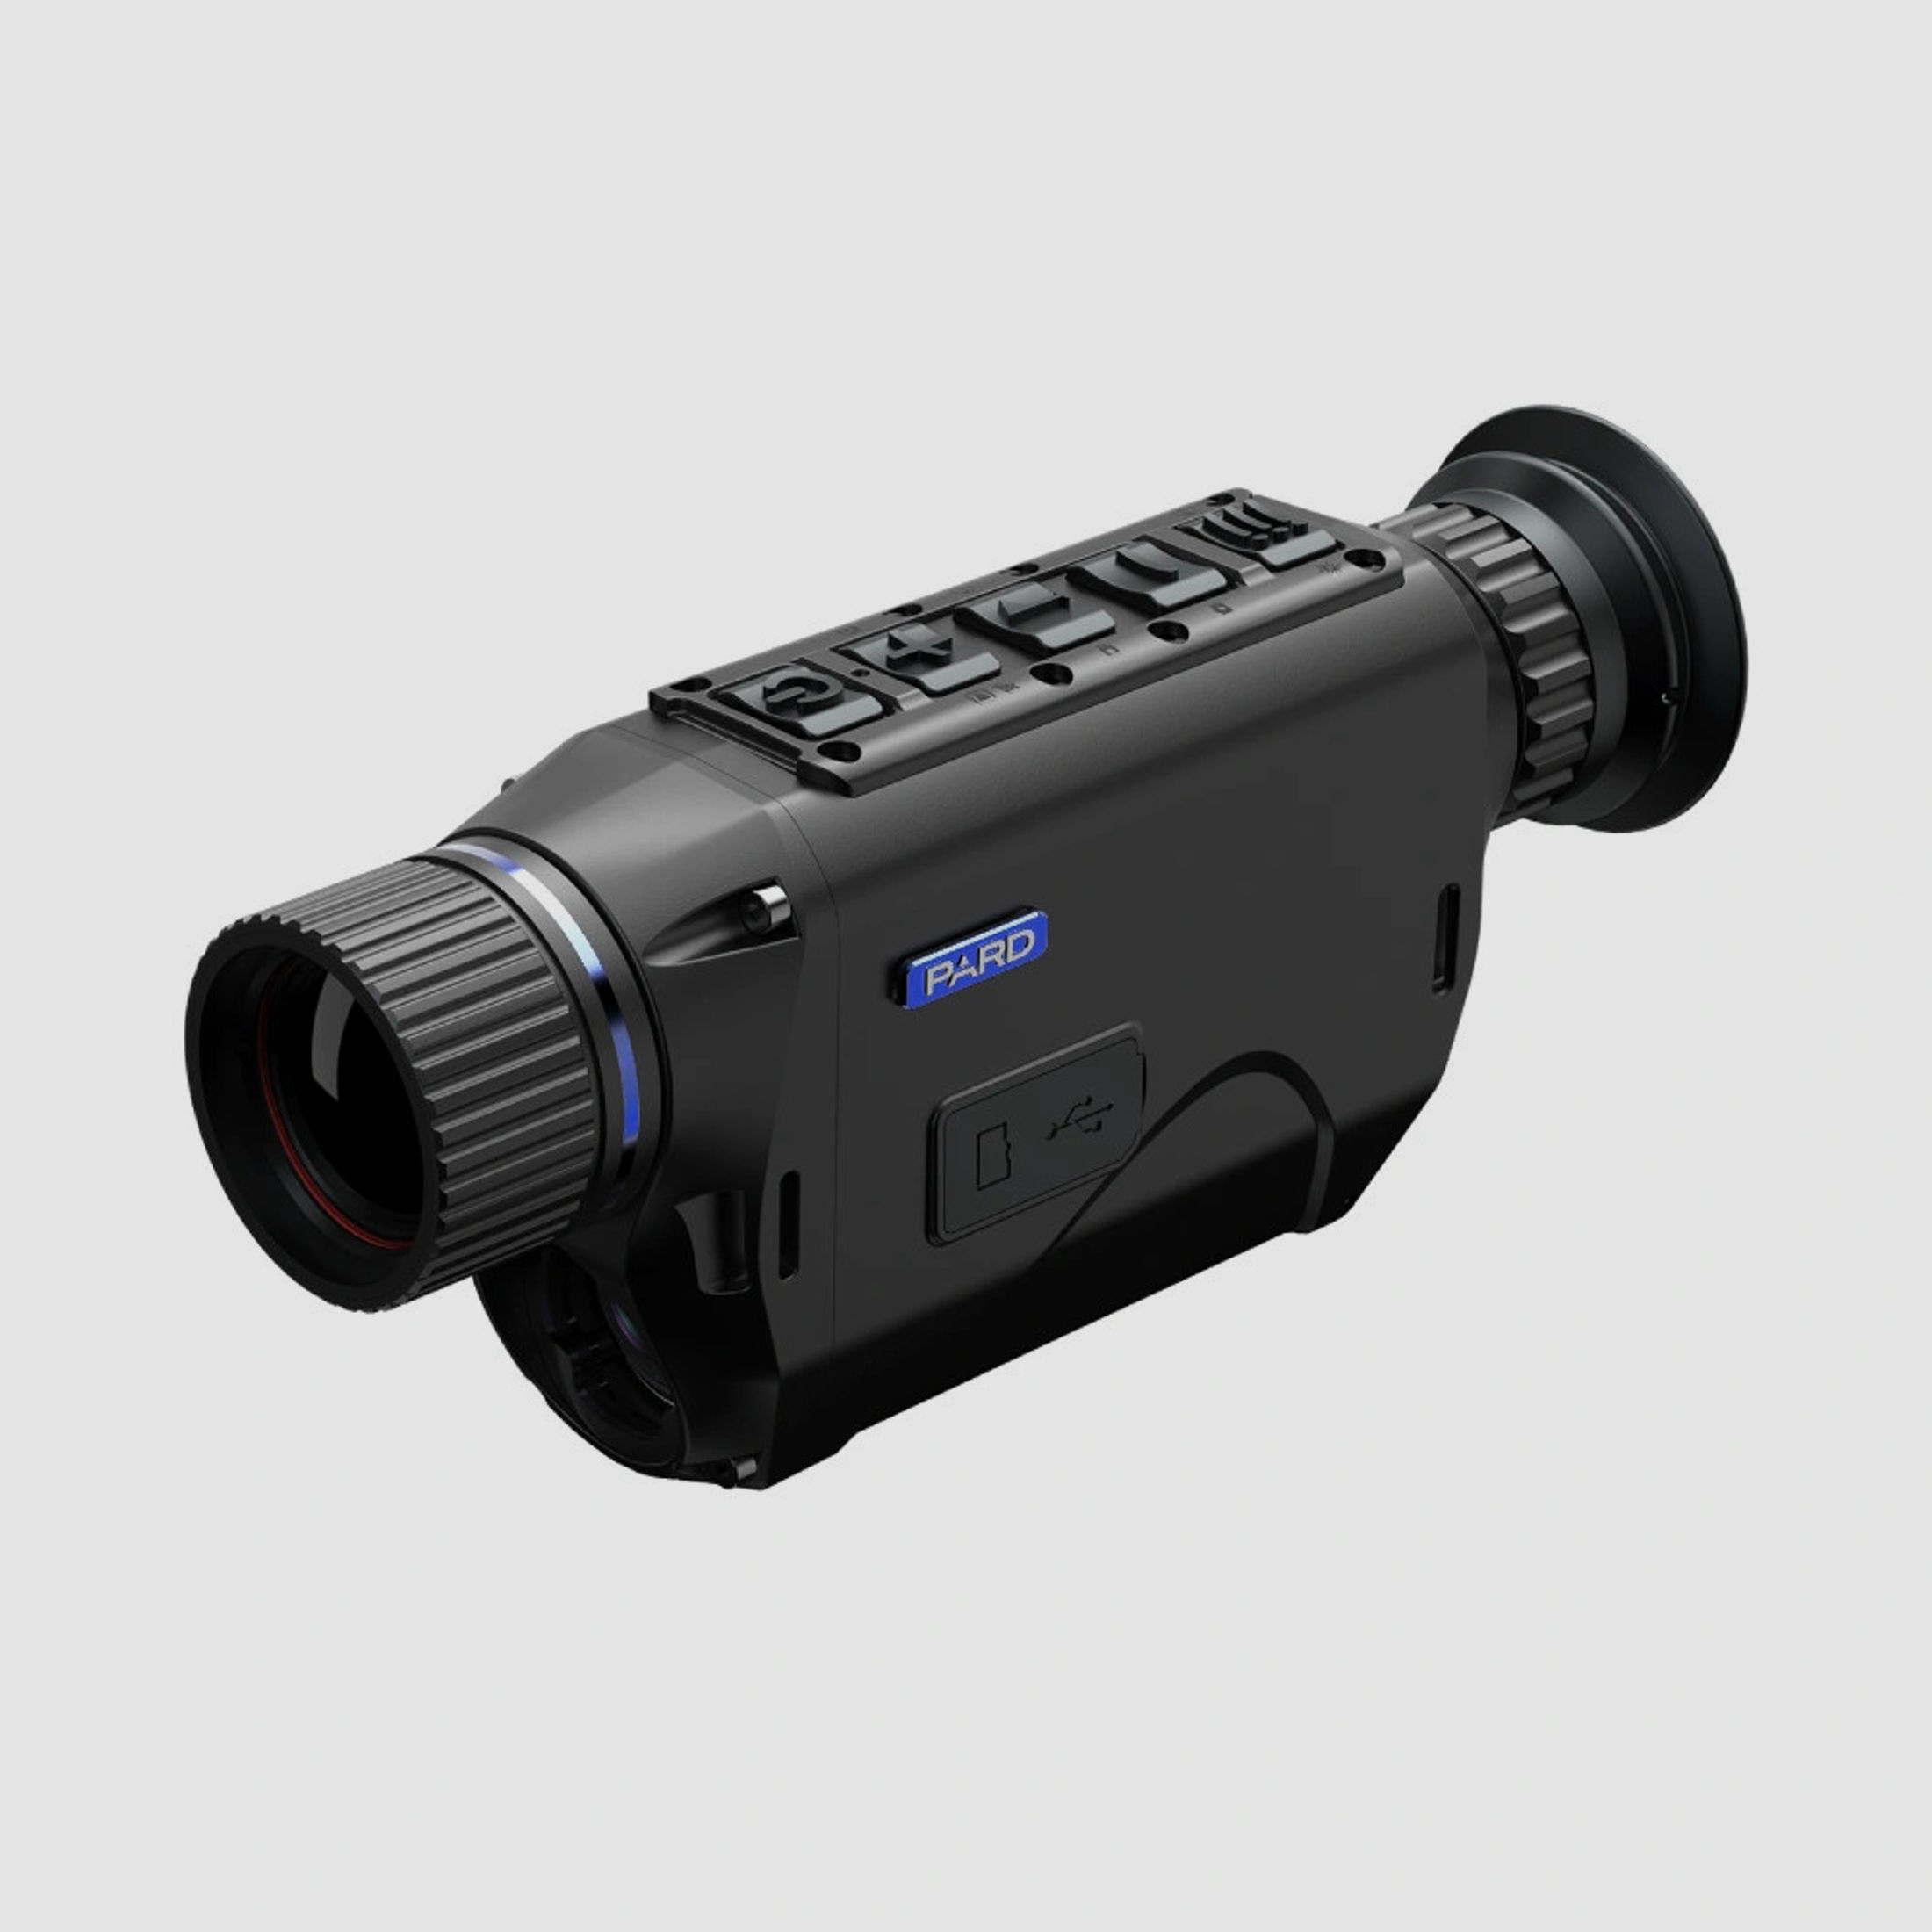 PARD TA32 Wärmebildgerät / Wärmebildkamera - 35 mm mit LRF